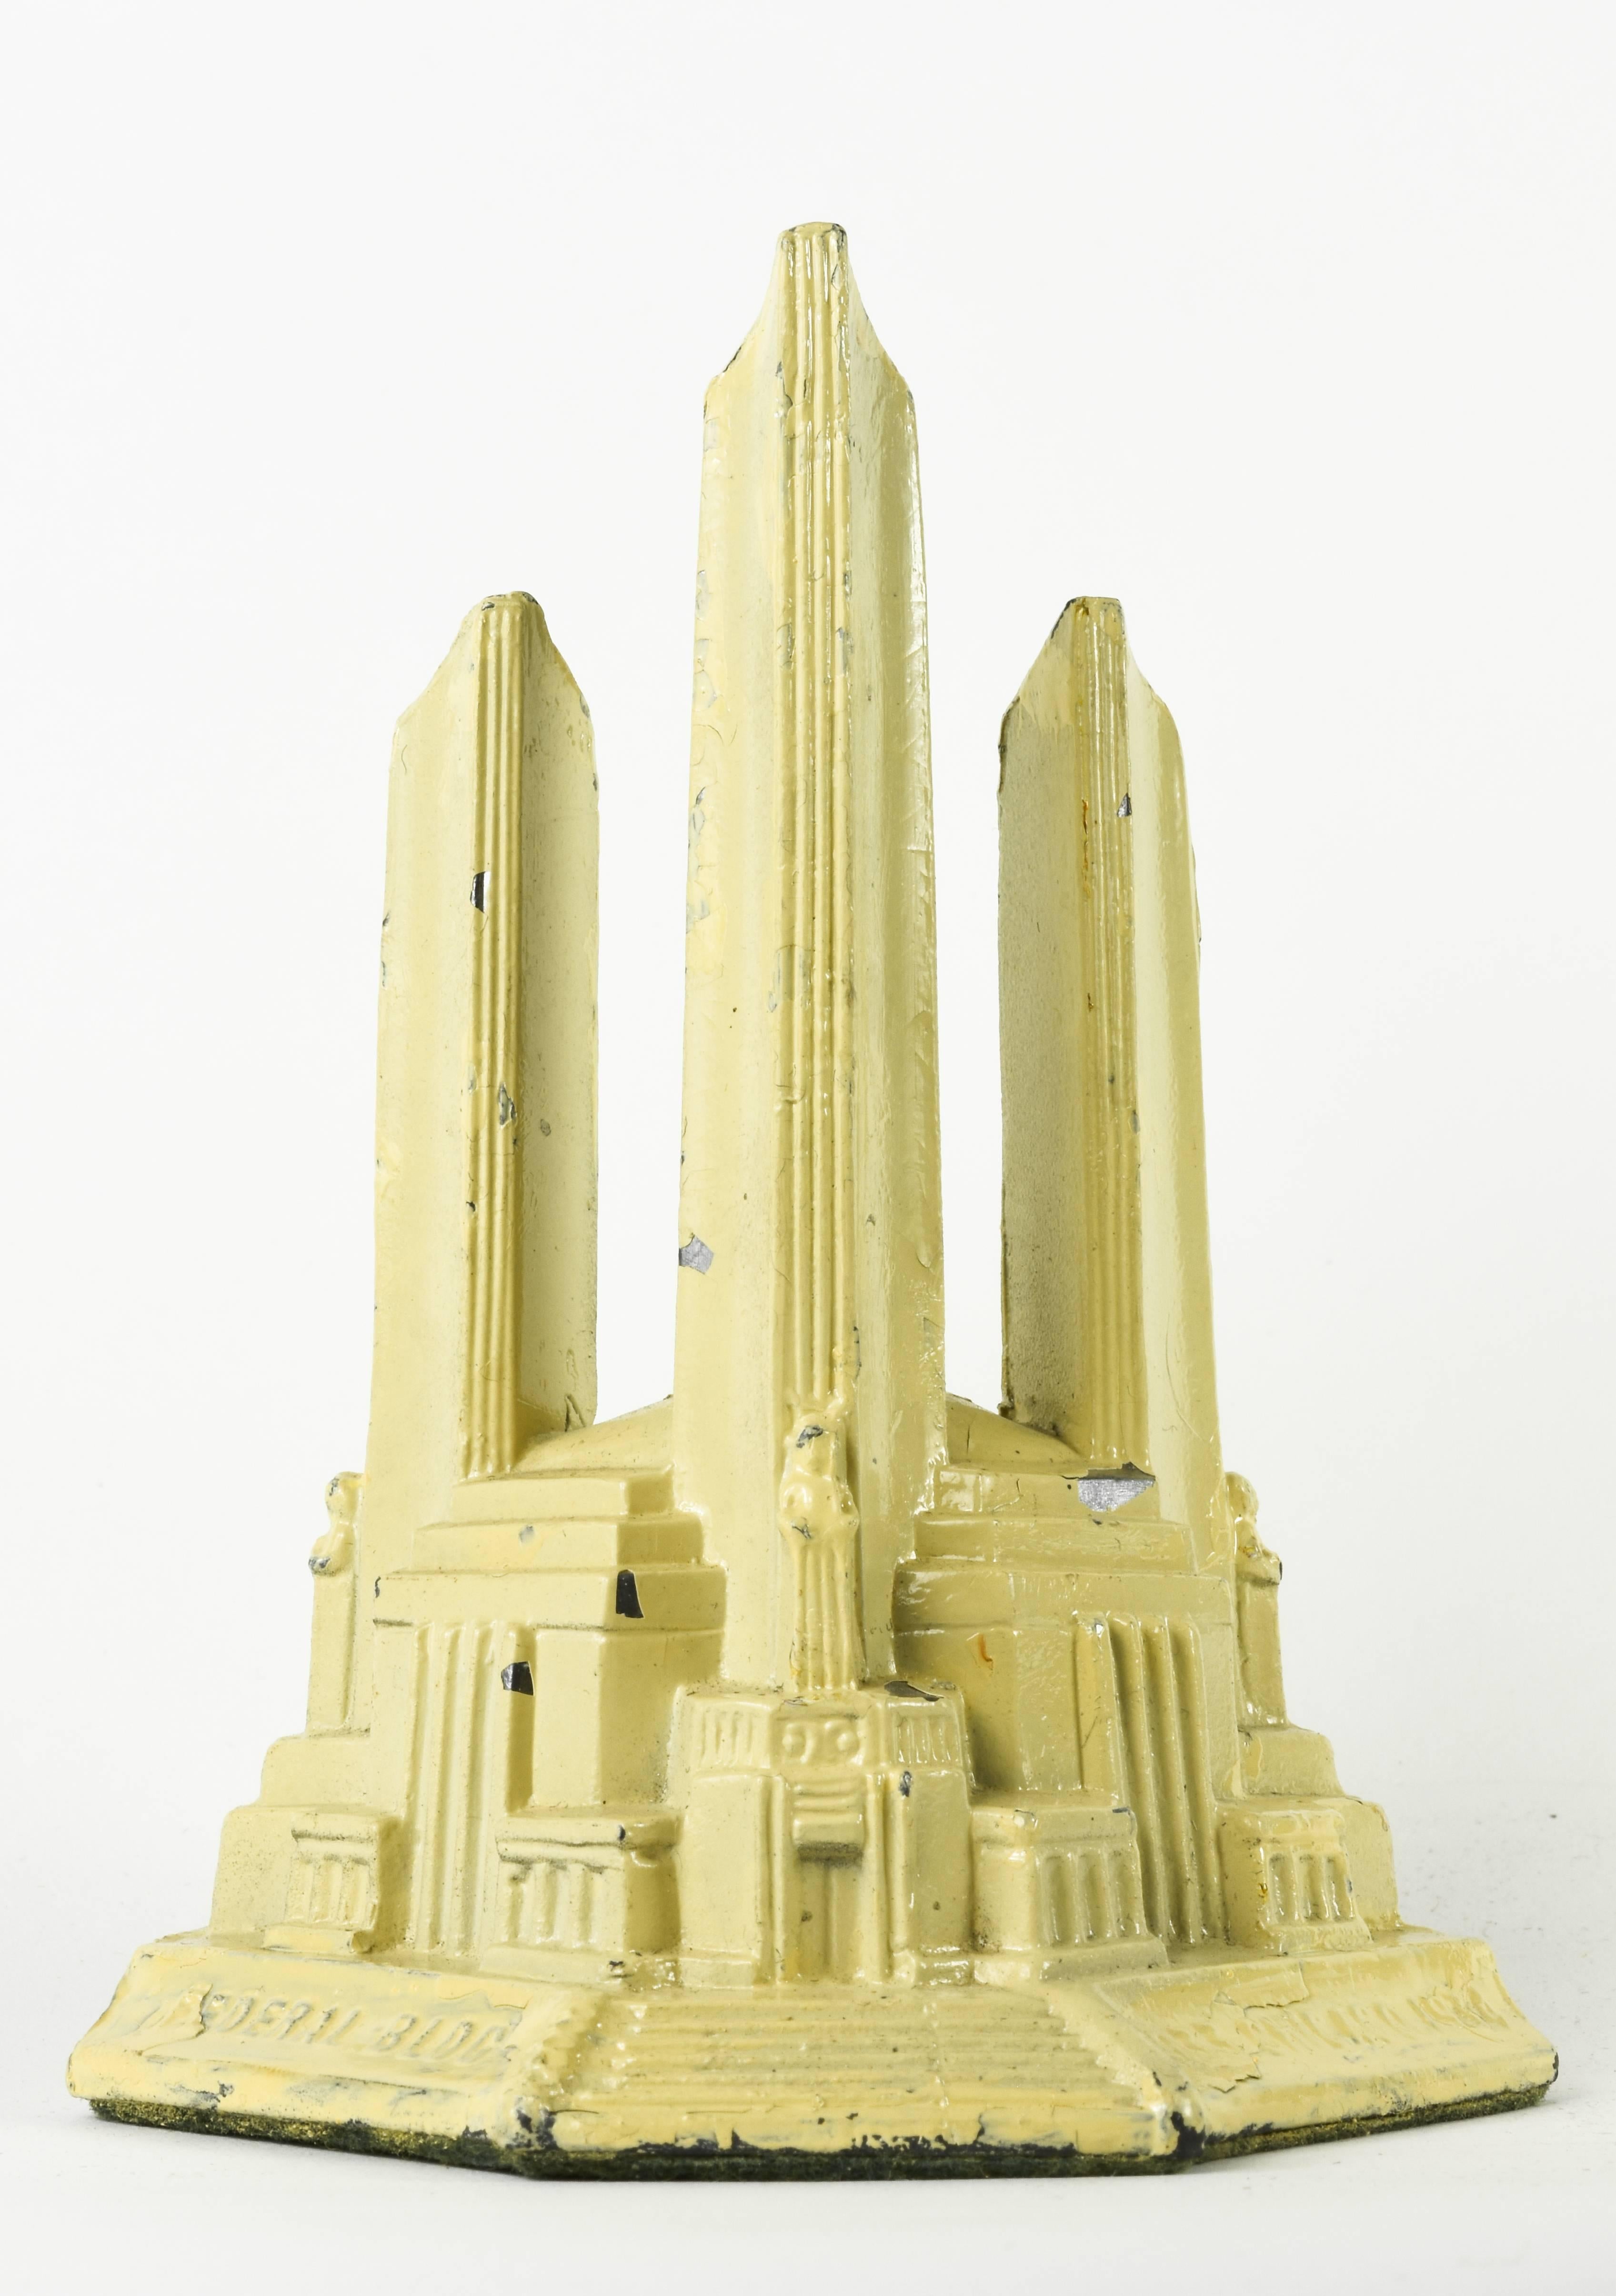 Art Deco Federal Building model, 1933 Century of Progress Exhibition, Chicago For Sale